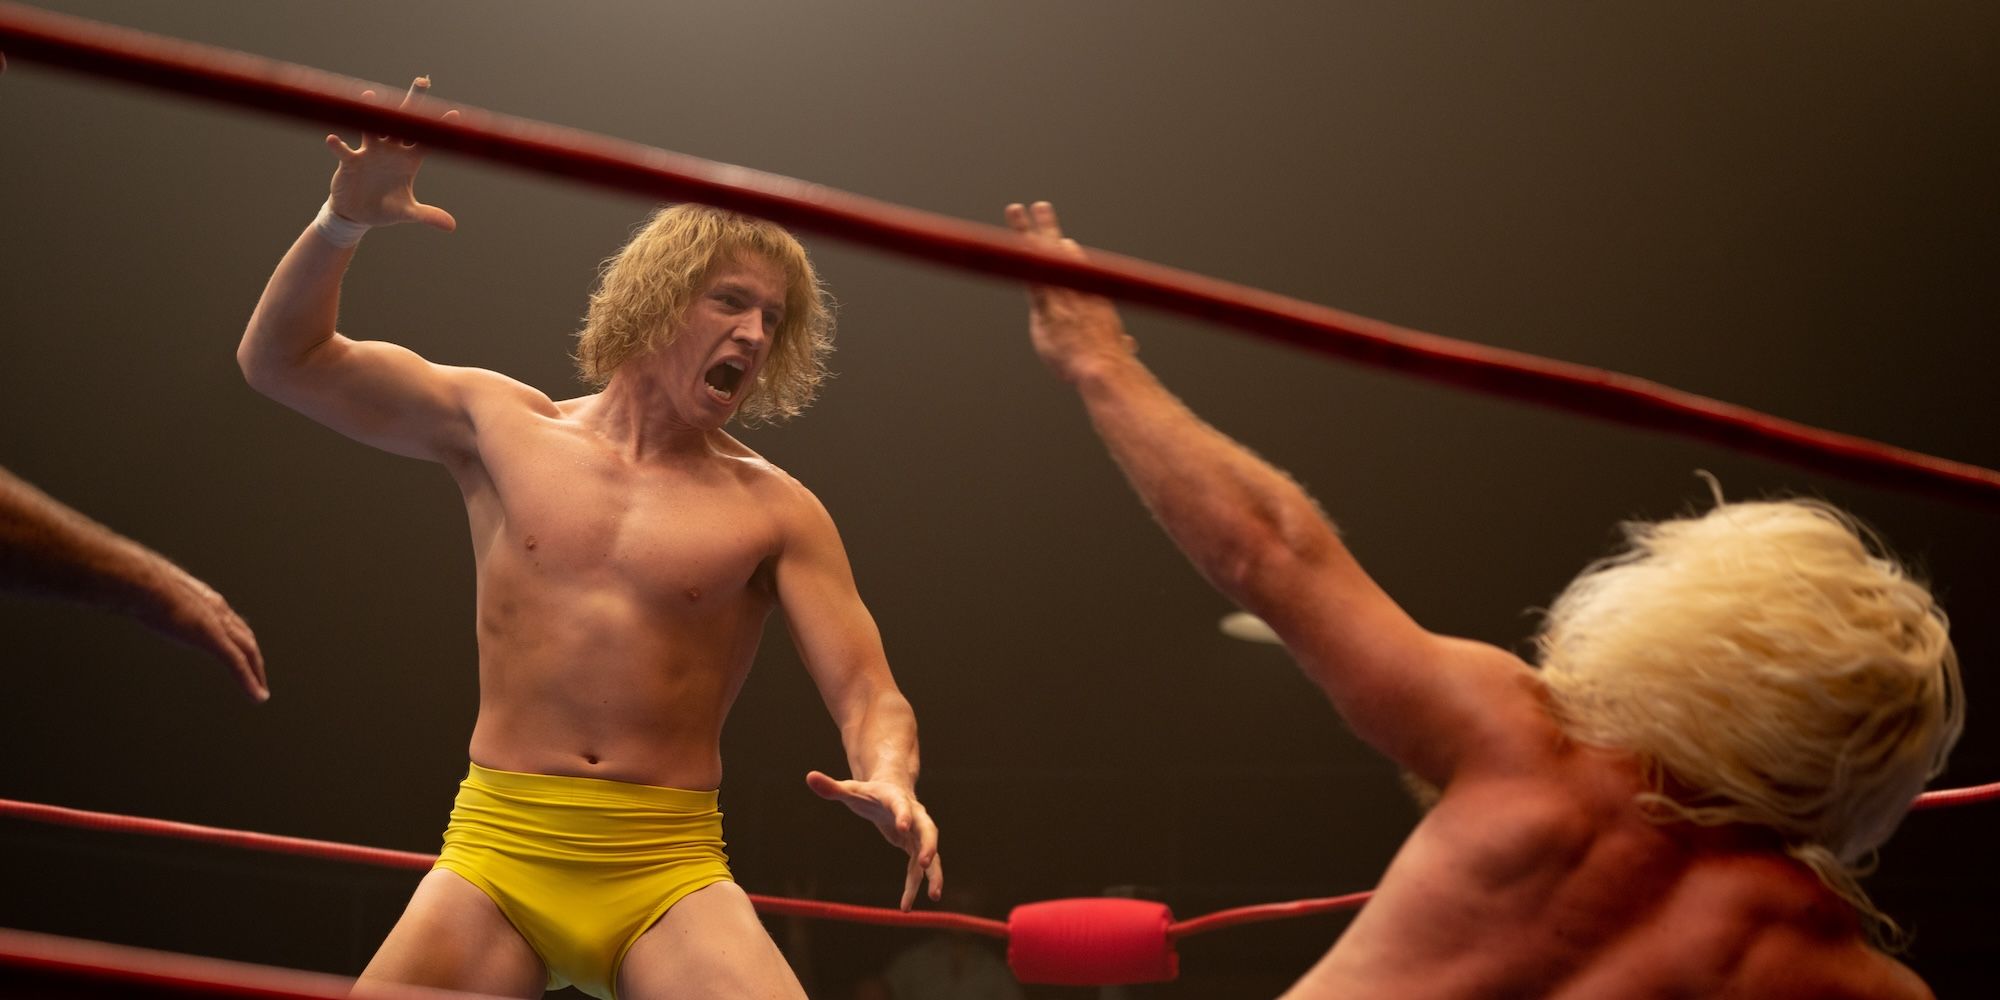 David Von Erich fights a wrestler in the ring in The Iron Claw